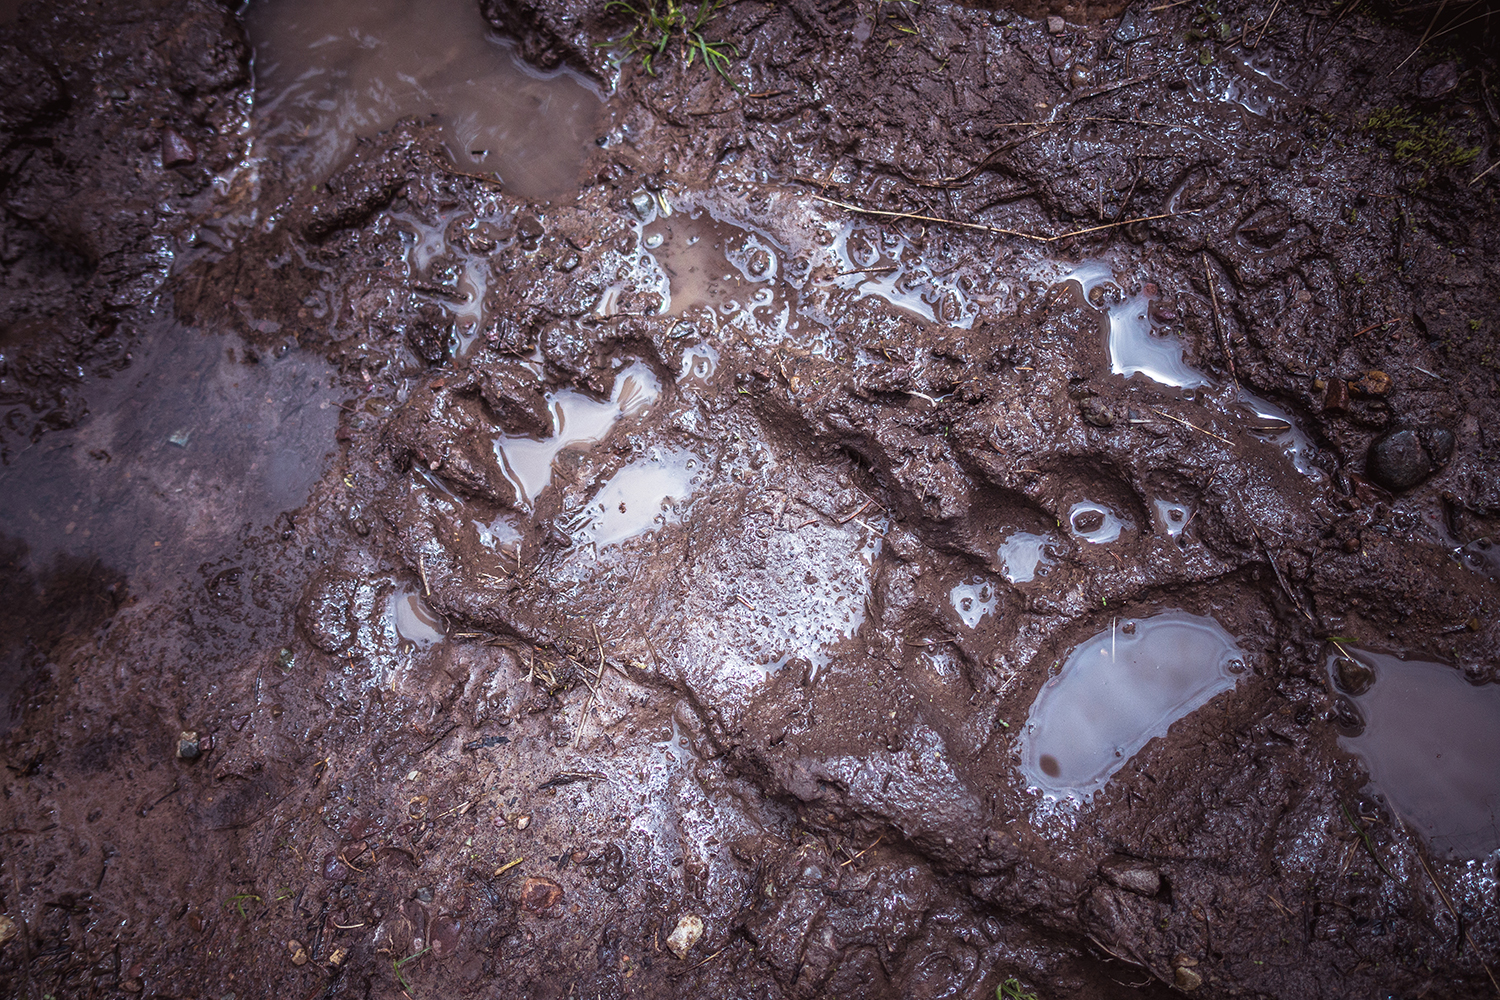 Bear pawprints in mud.